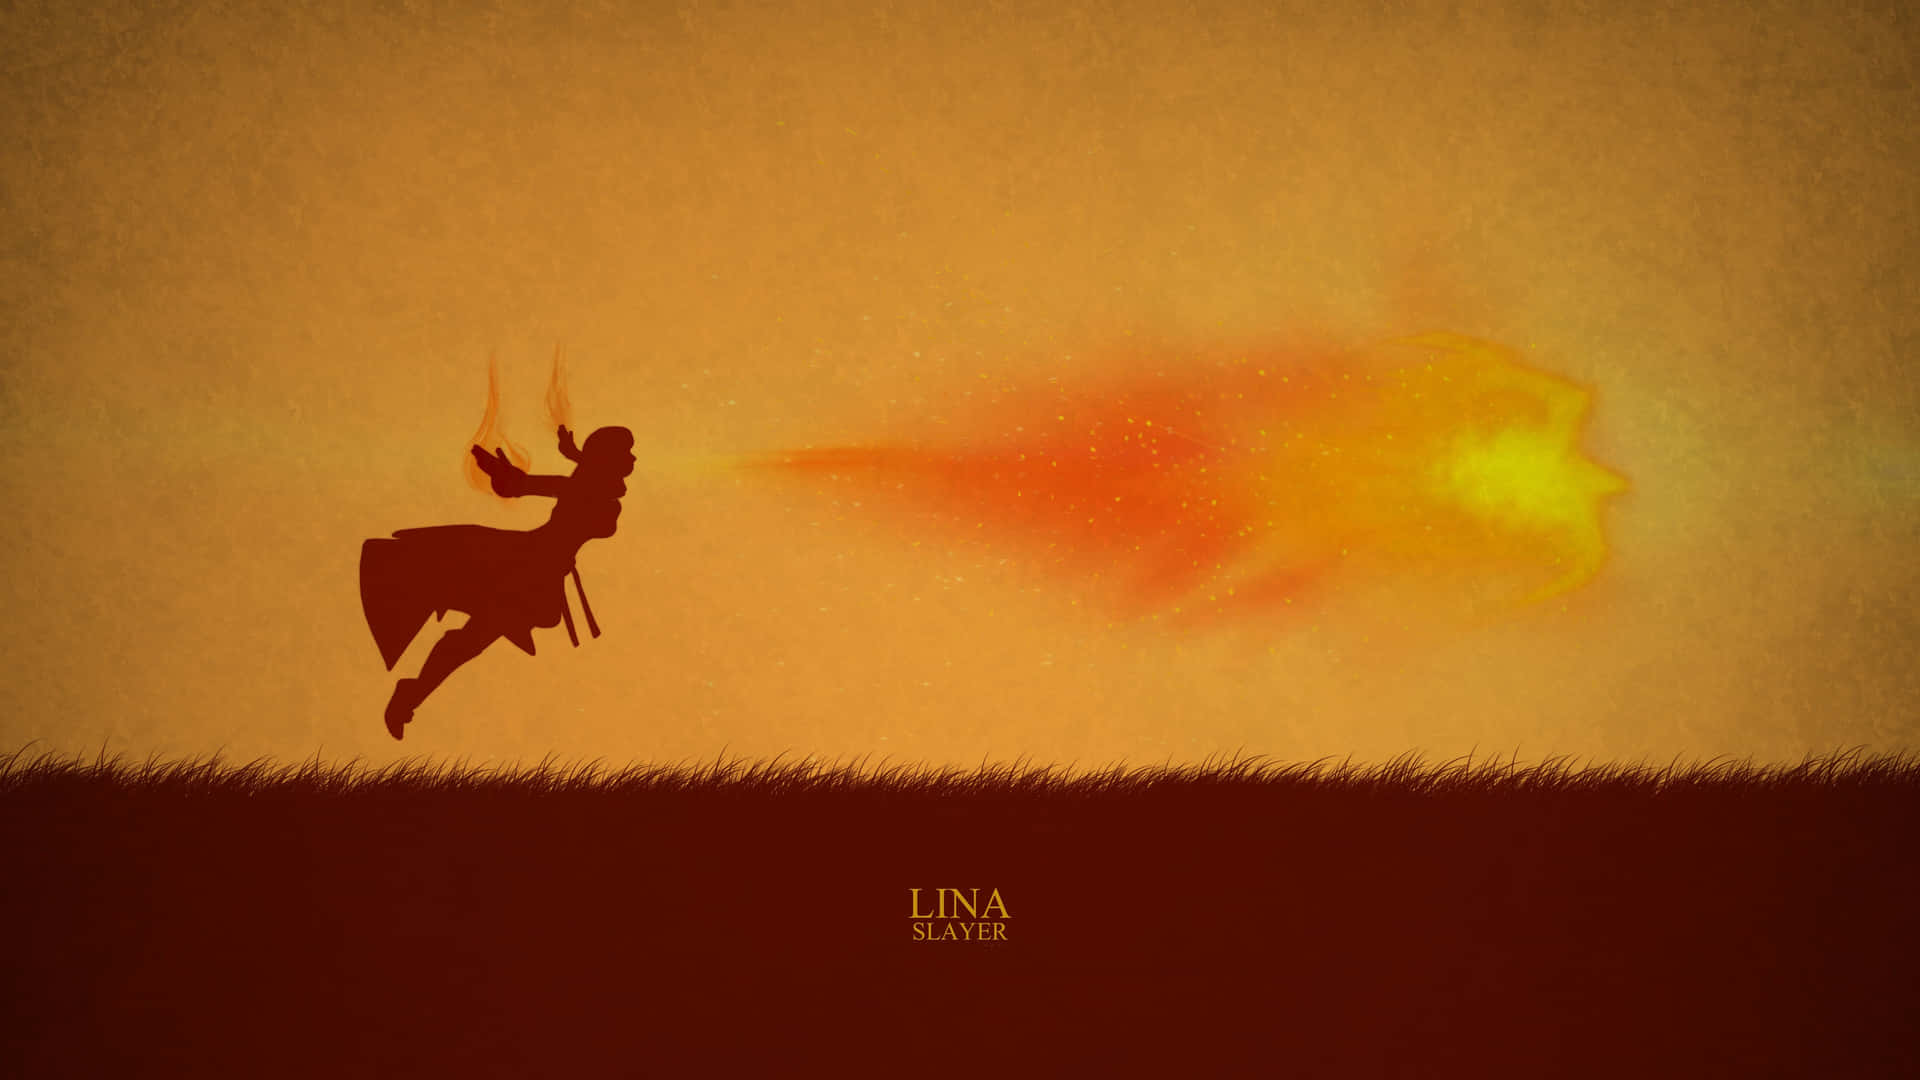 Lina the Slayer unleashing her fiery powers in Dota 2 Wallpaper